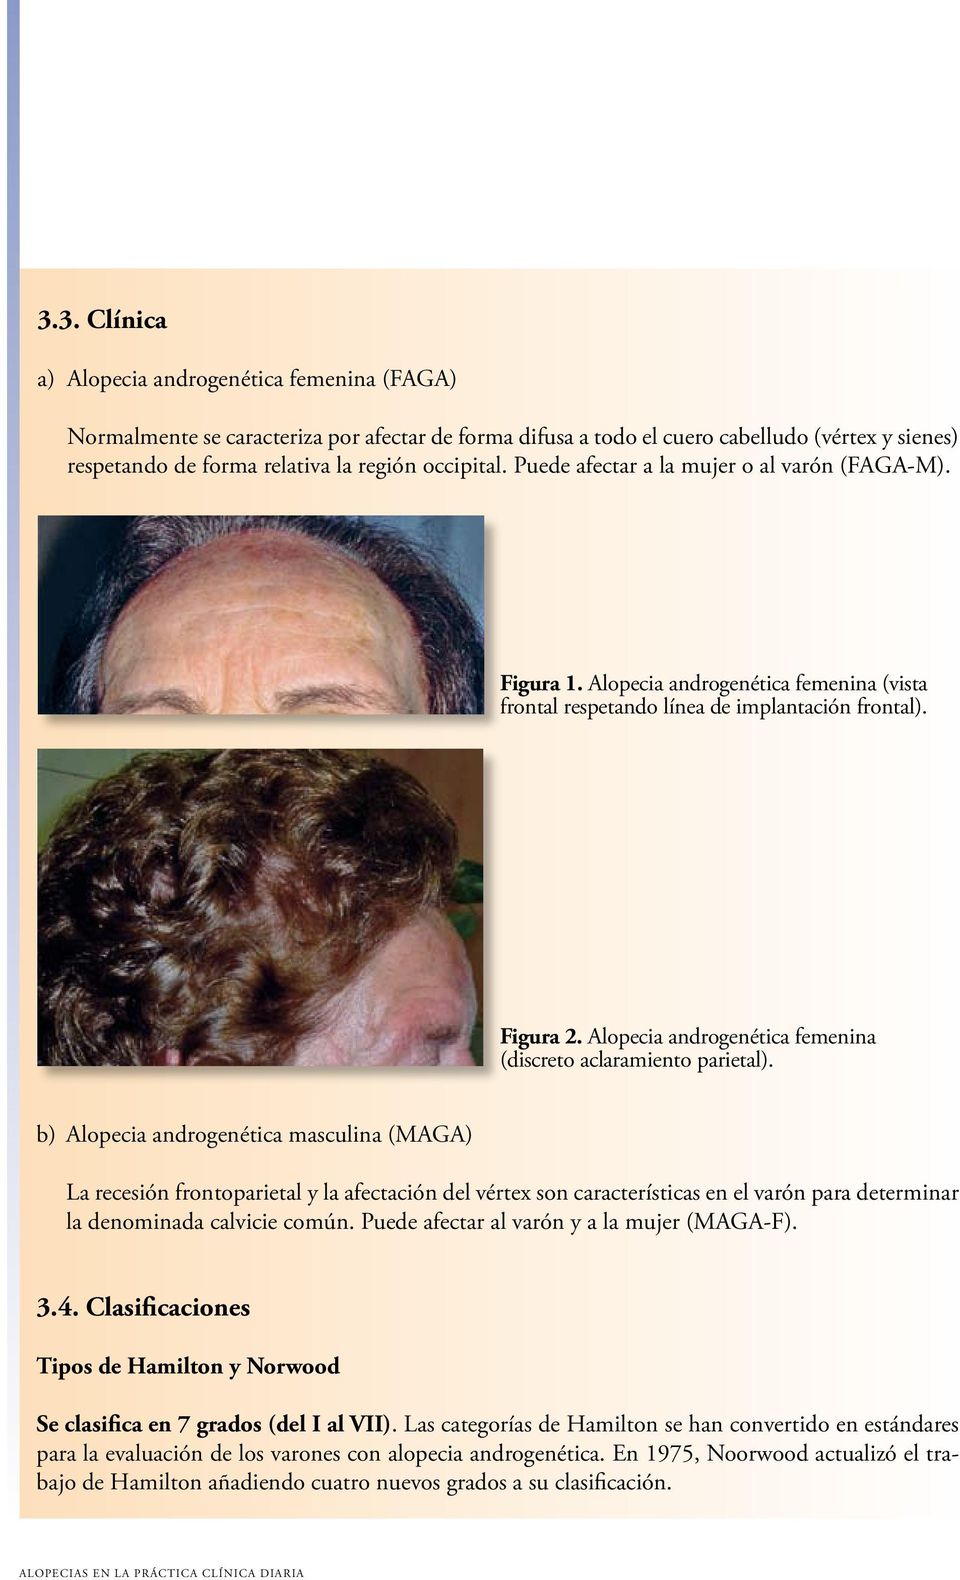 Alopecia androgenética femenina (discreto aclaramiento parietal).